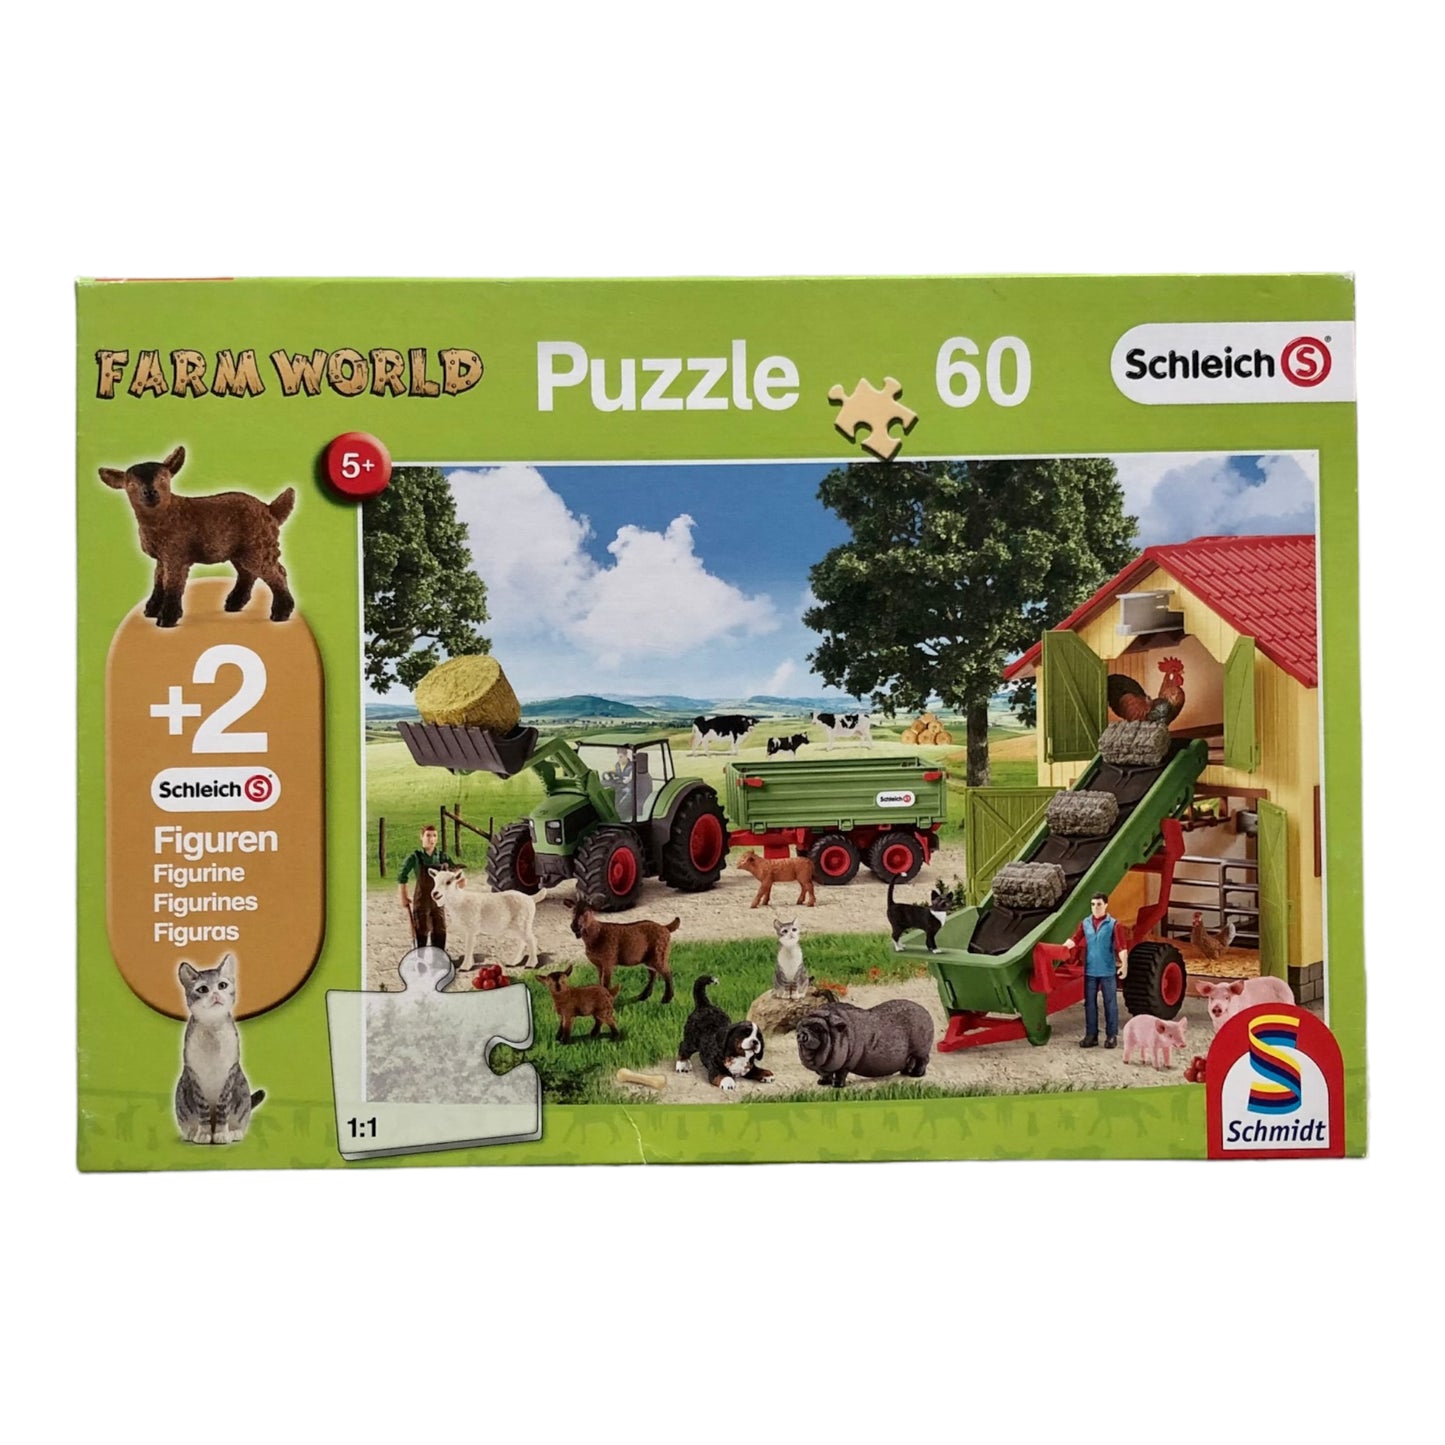 Farm World Puzzle Schleich - 60 pieces